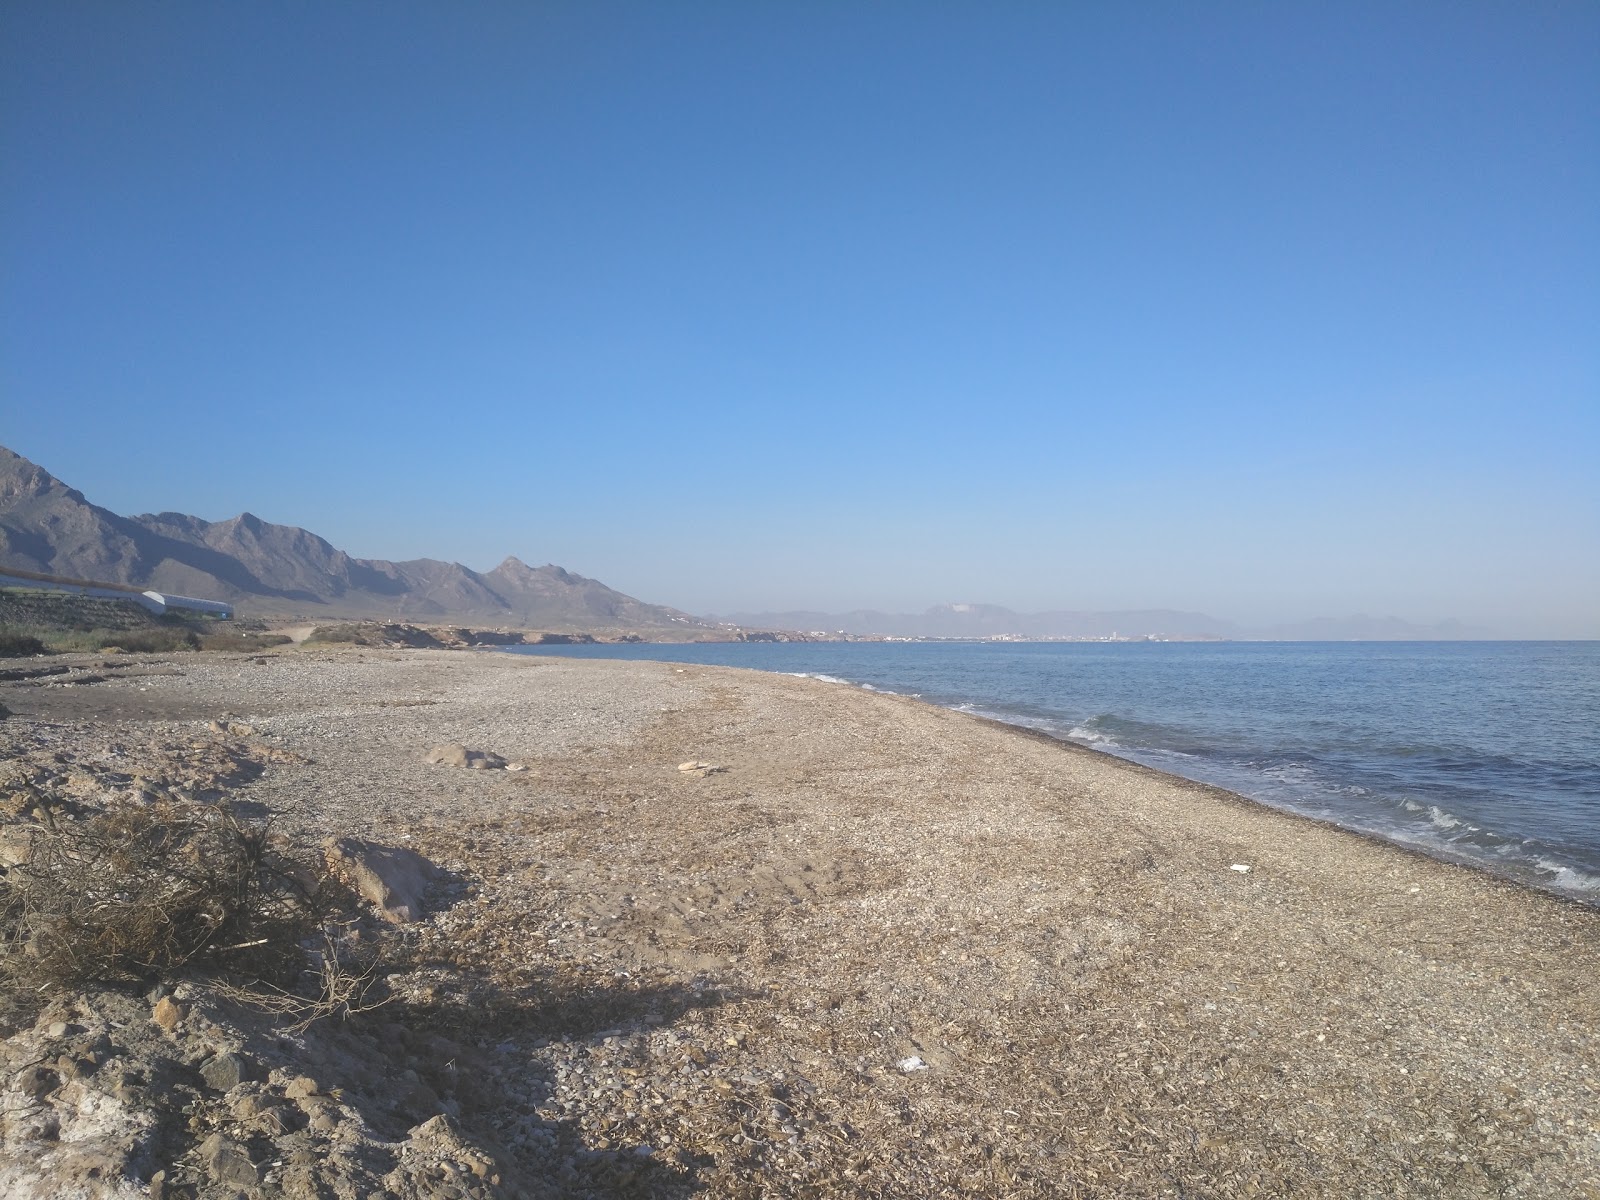 Foto von Playa de las Covaticas mit grauer sand&kies Oberfläche